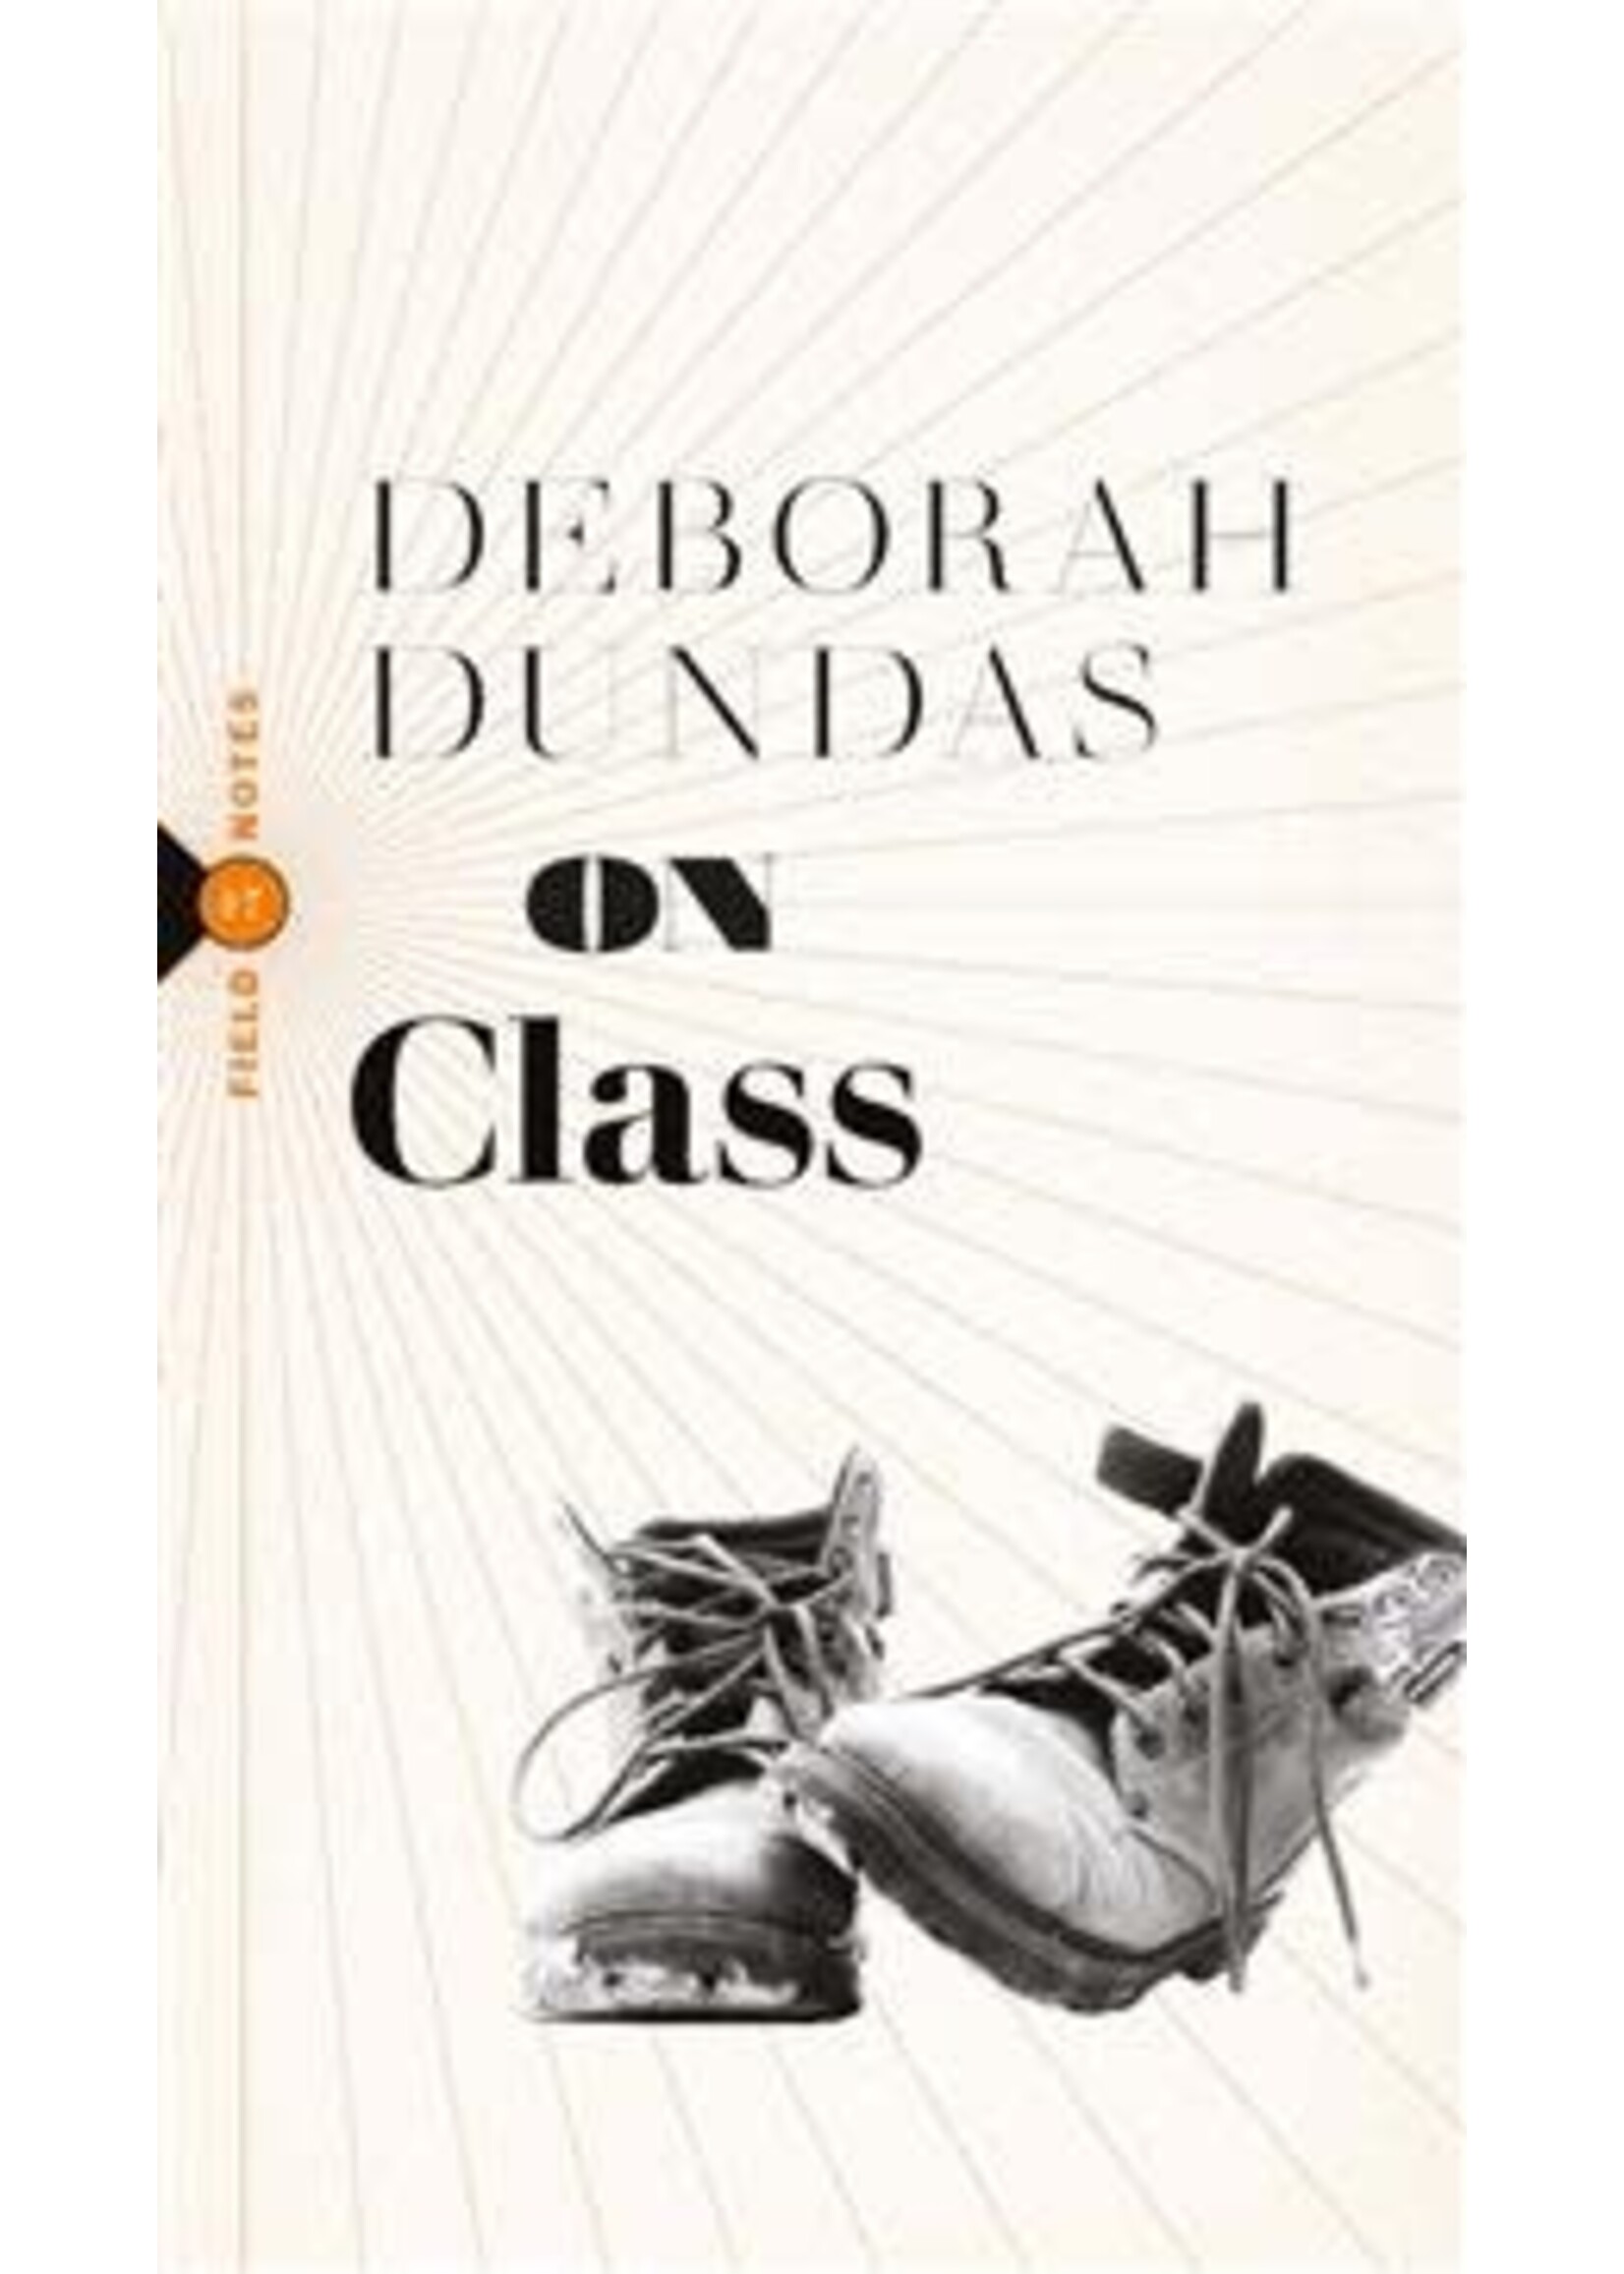 On Class (Field Notes #7) by Deborah Dundas